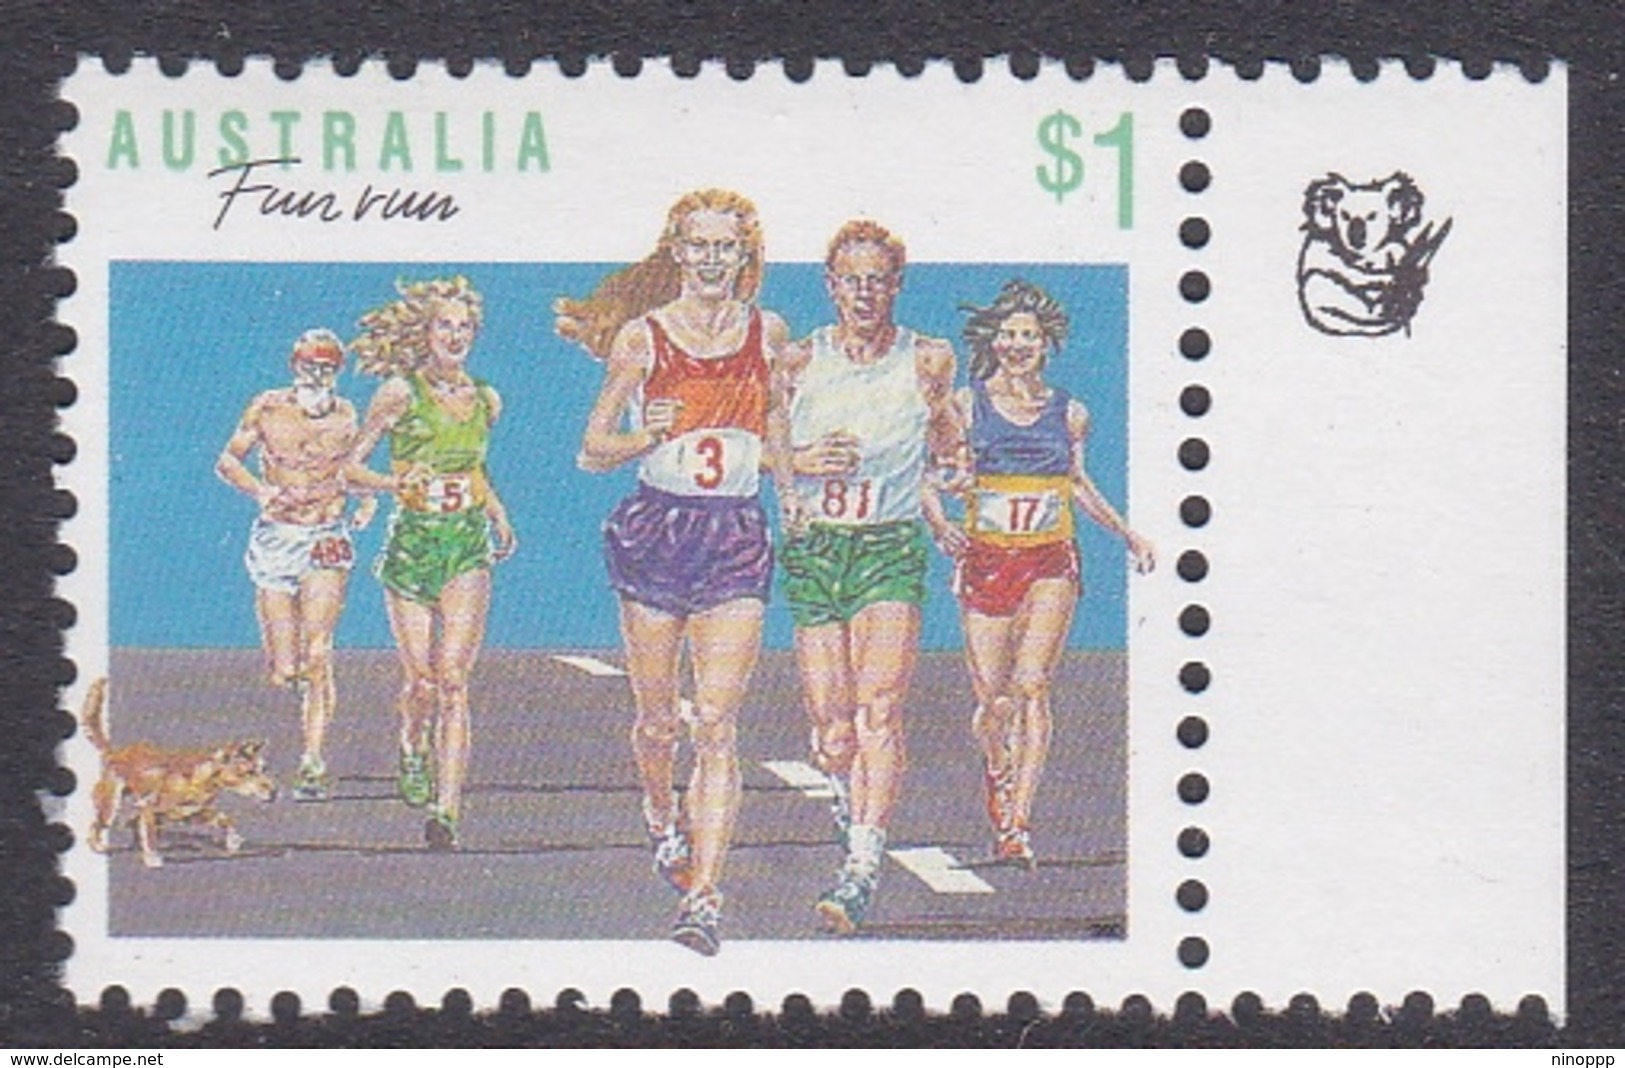 Australia ASC 1231a 1990 Sports $ 1.00 Fun Run 1 Koala, Mint Never Hinged - Prove & Ristampe